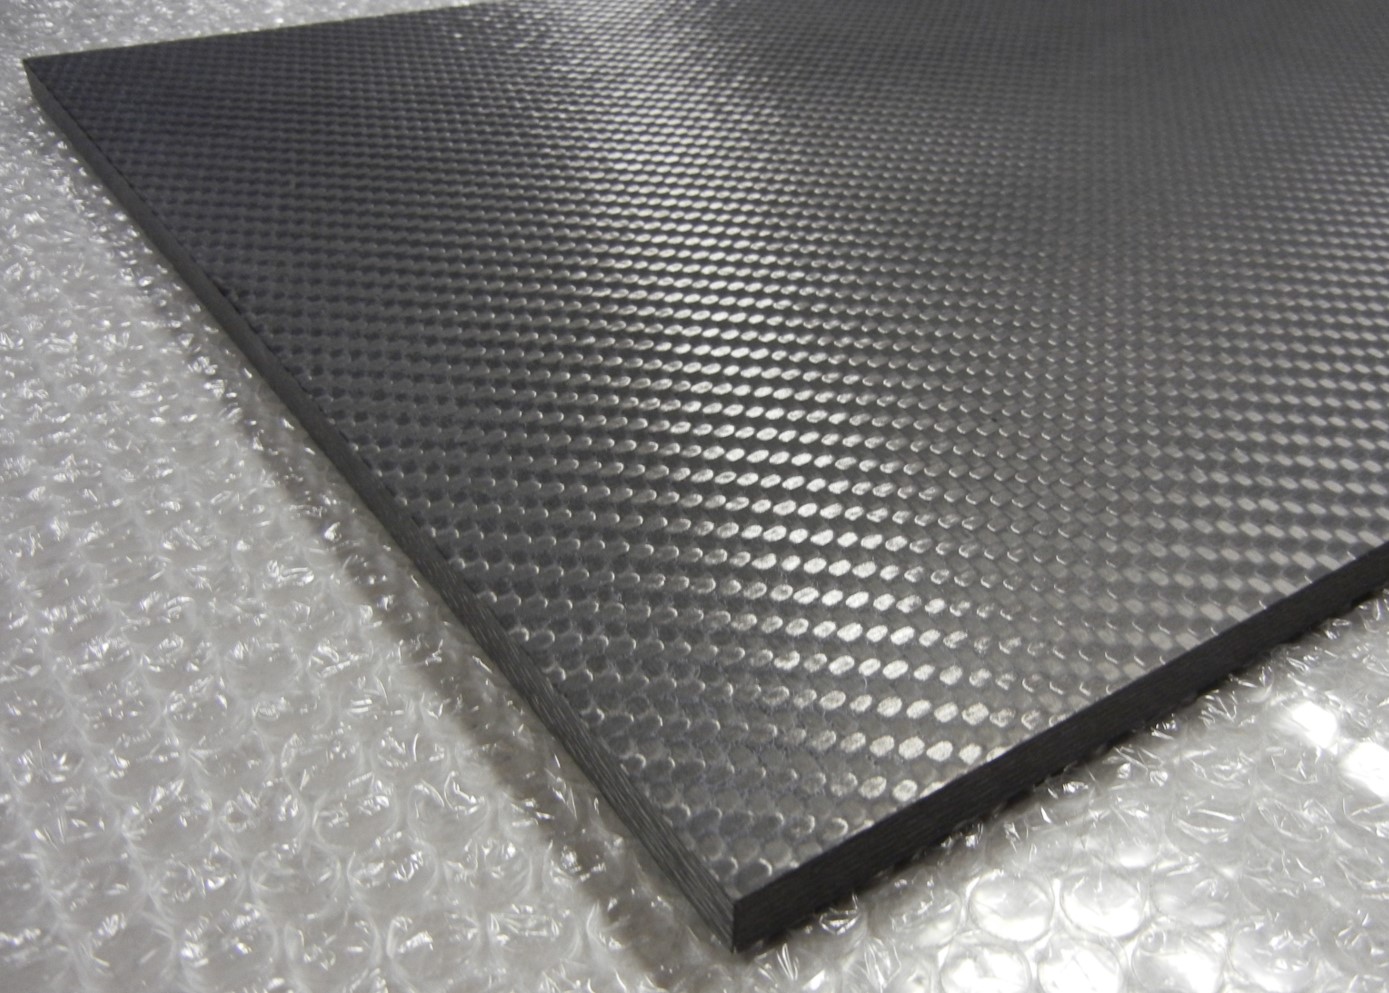 2mm carbon fiber plate.